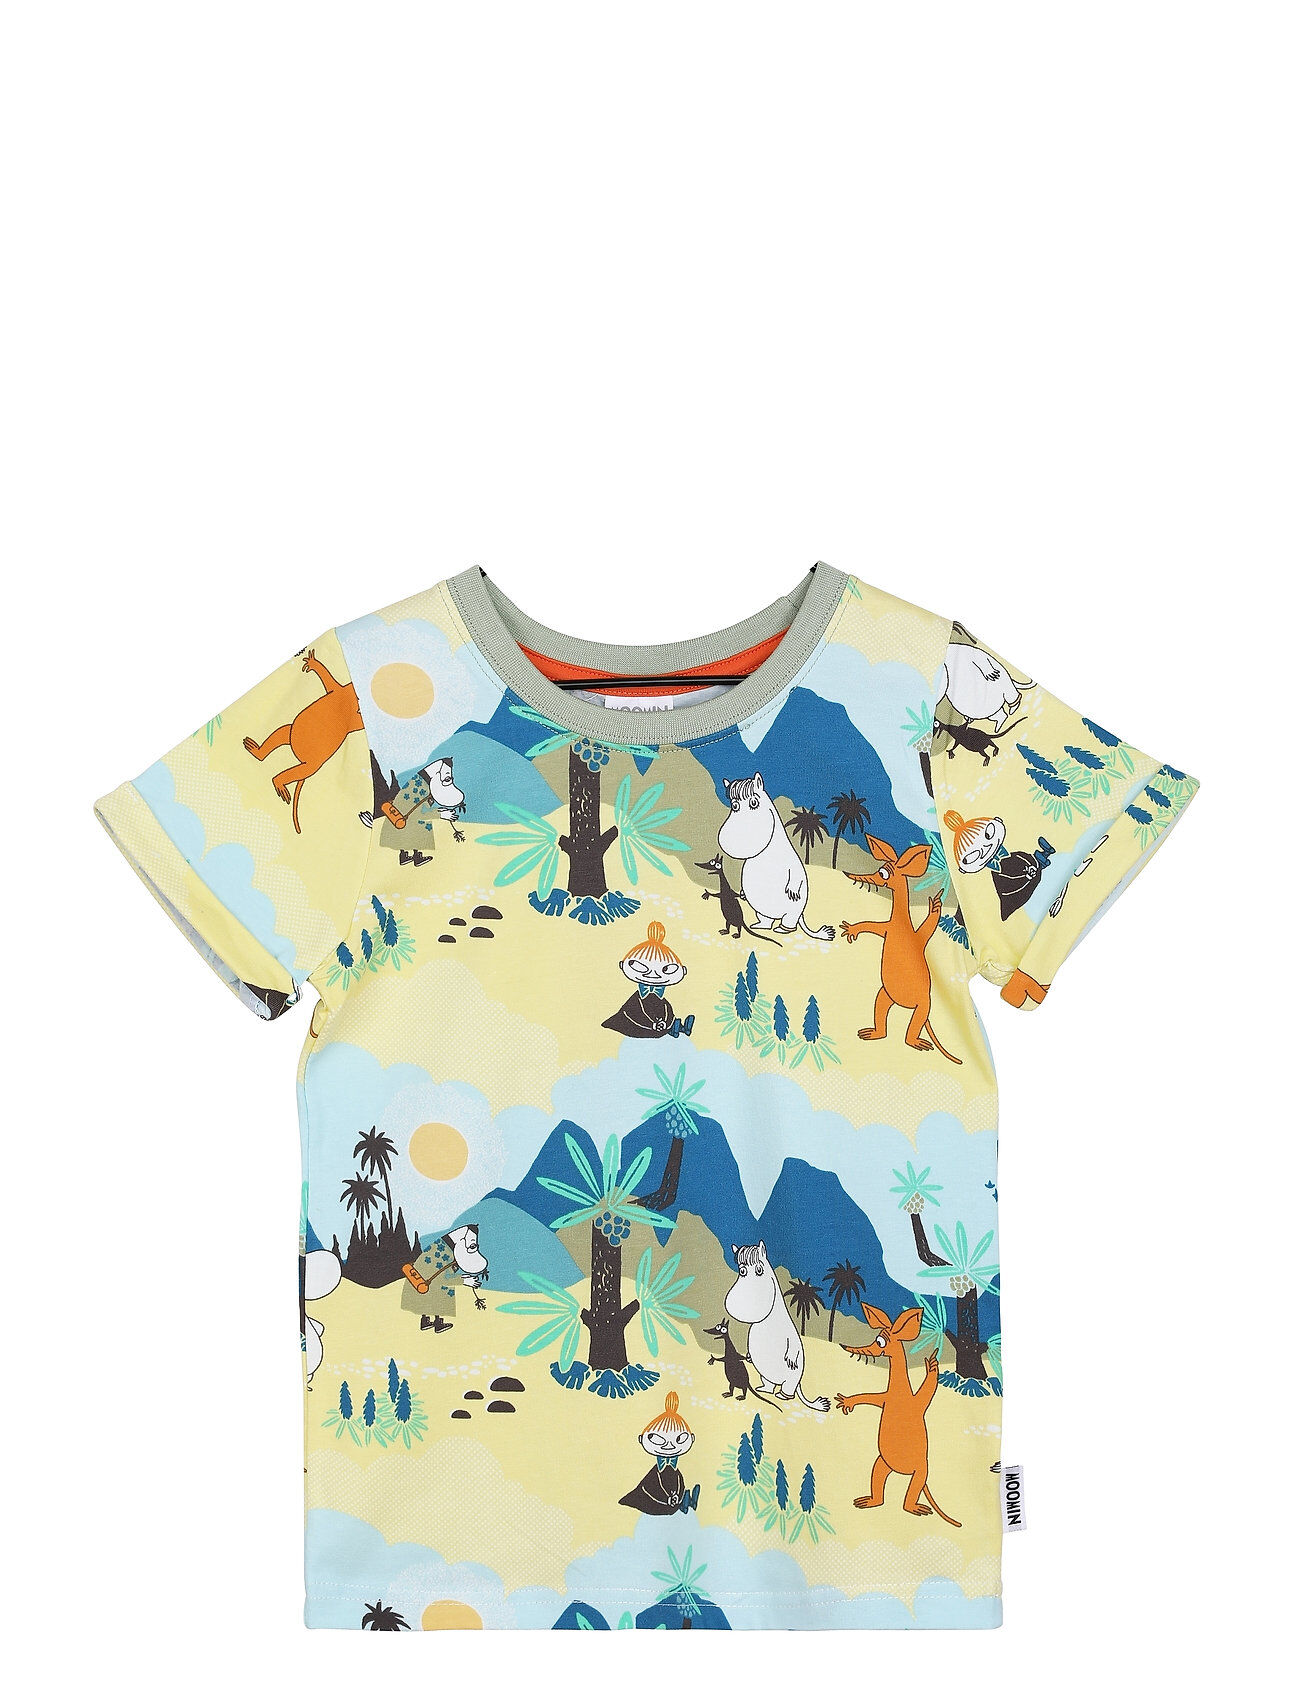 Martinex Tropical T-Shirt T-shirts Short-sleeved Multi/mønstret Martinex